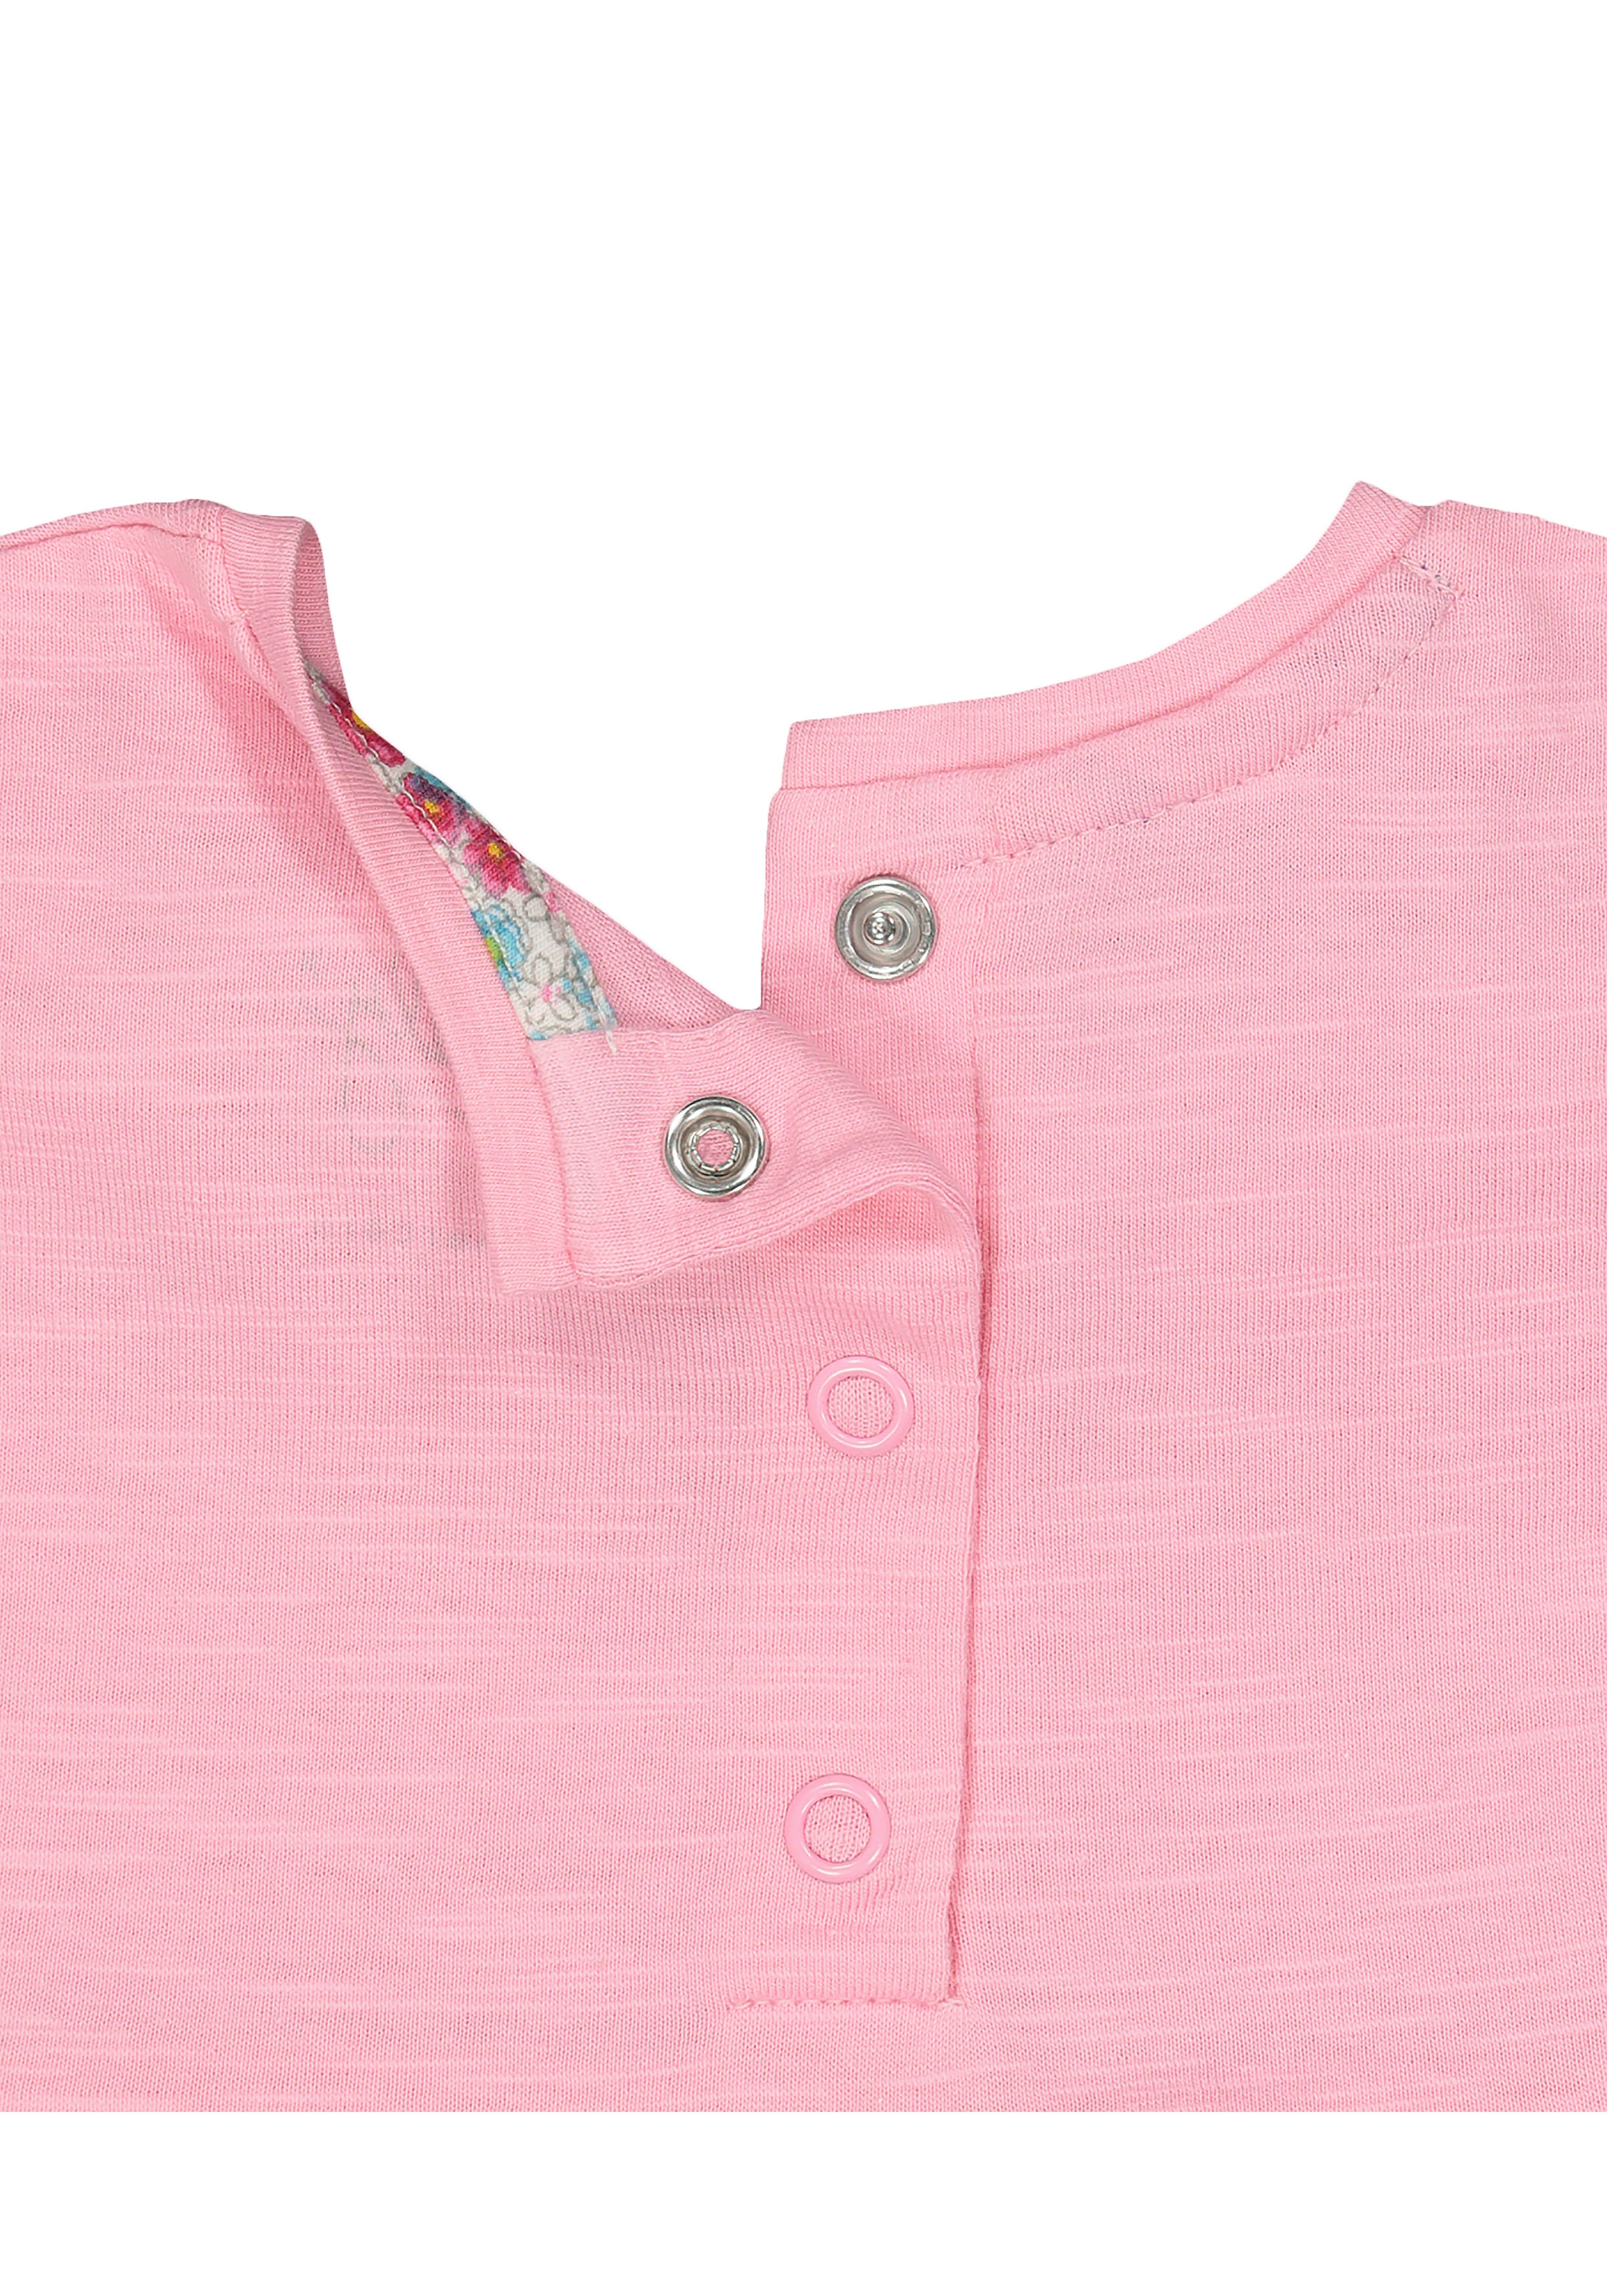 Mothercare | Girls Half Sleeves T-Shirt And Legging Set Floral Print - Pink 2